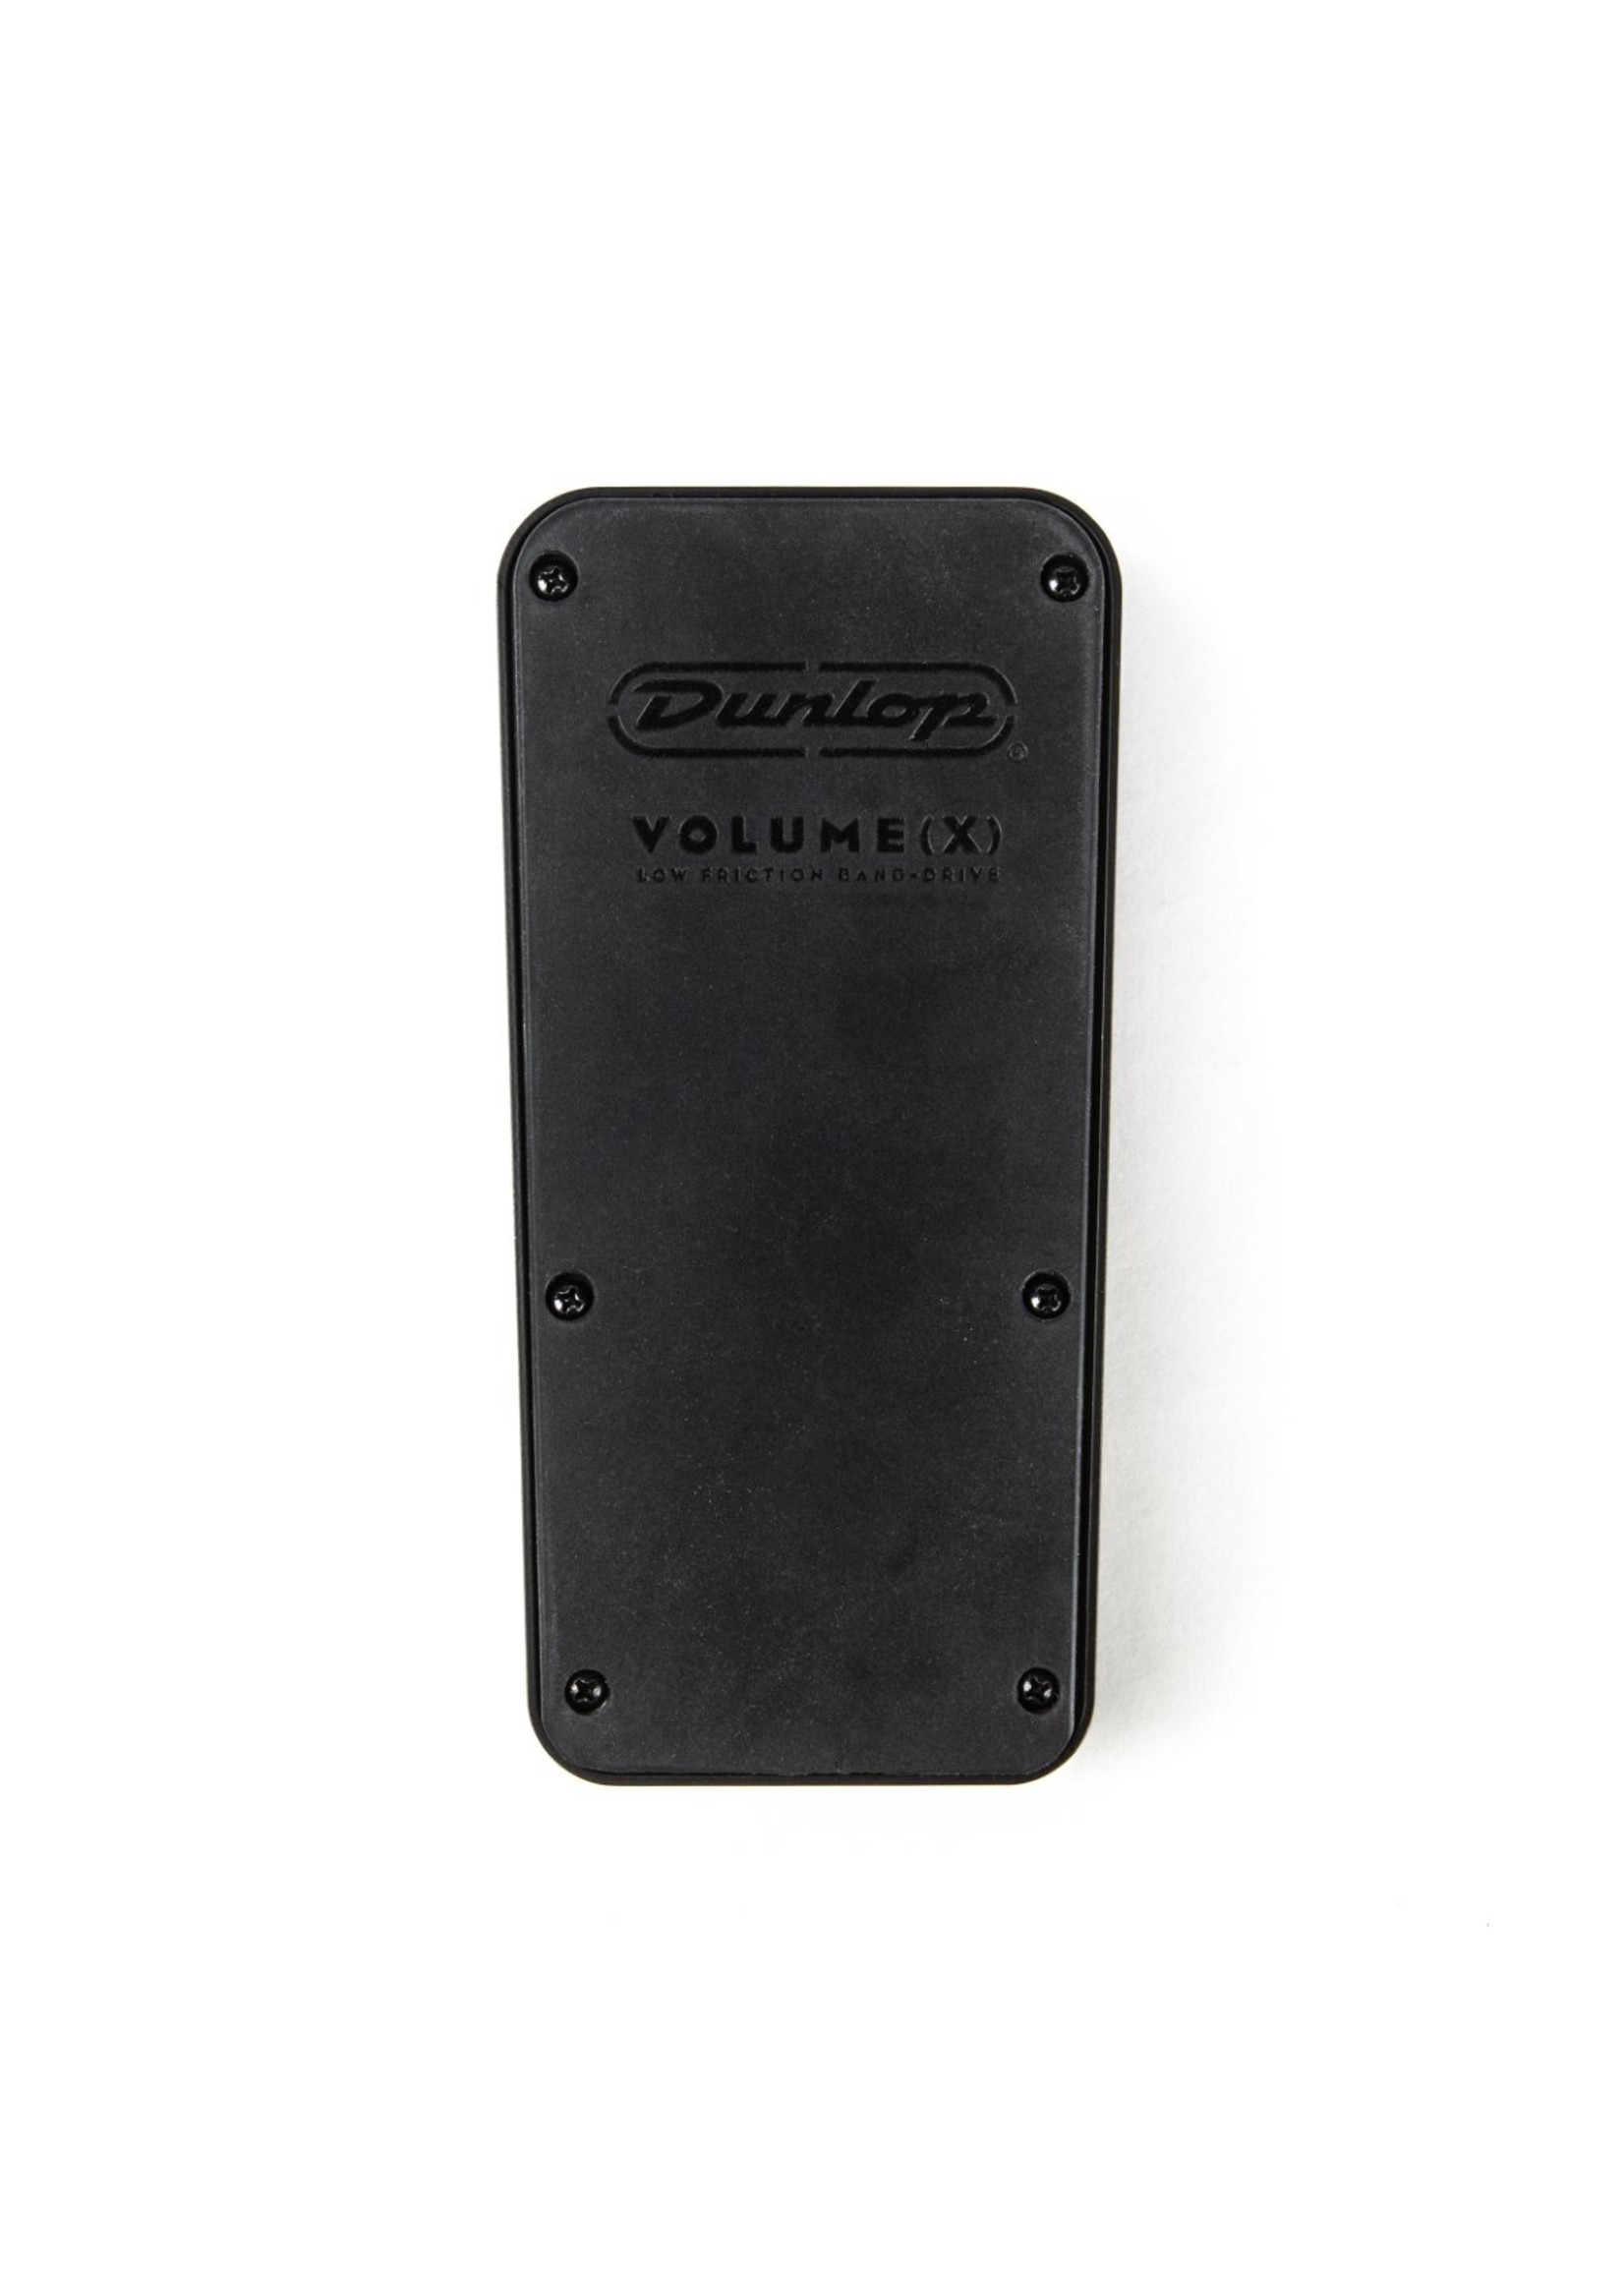 Dunlop Dunlop DVP5 Volume (X) 8 Pedal